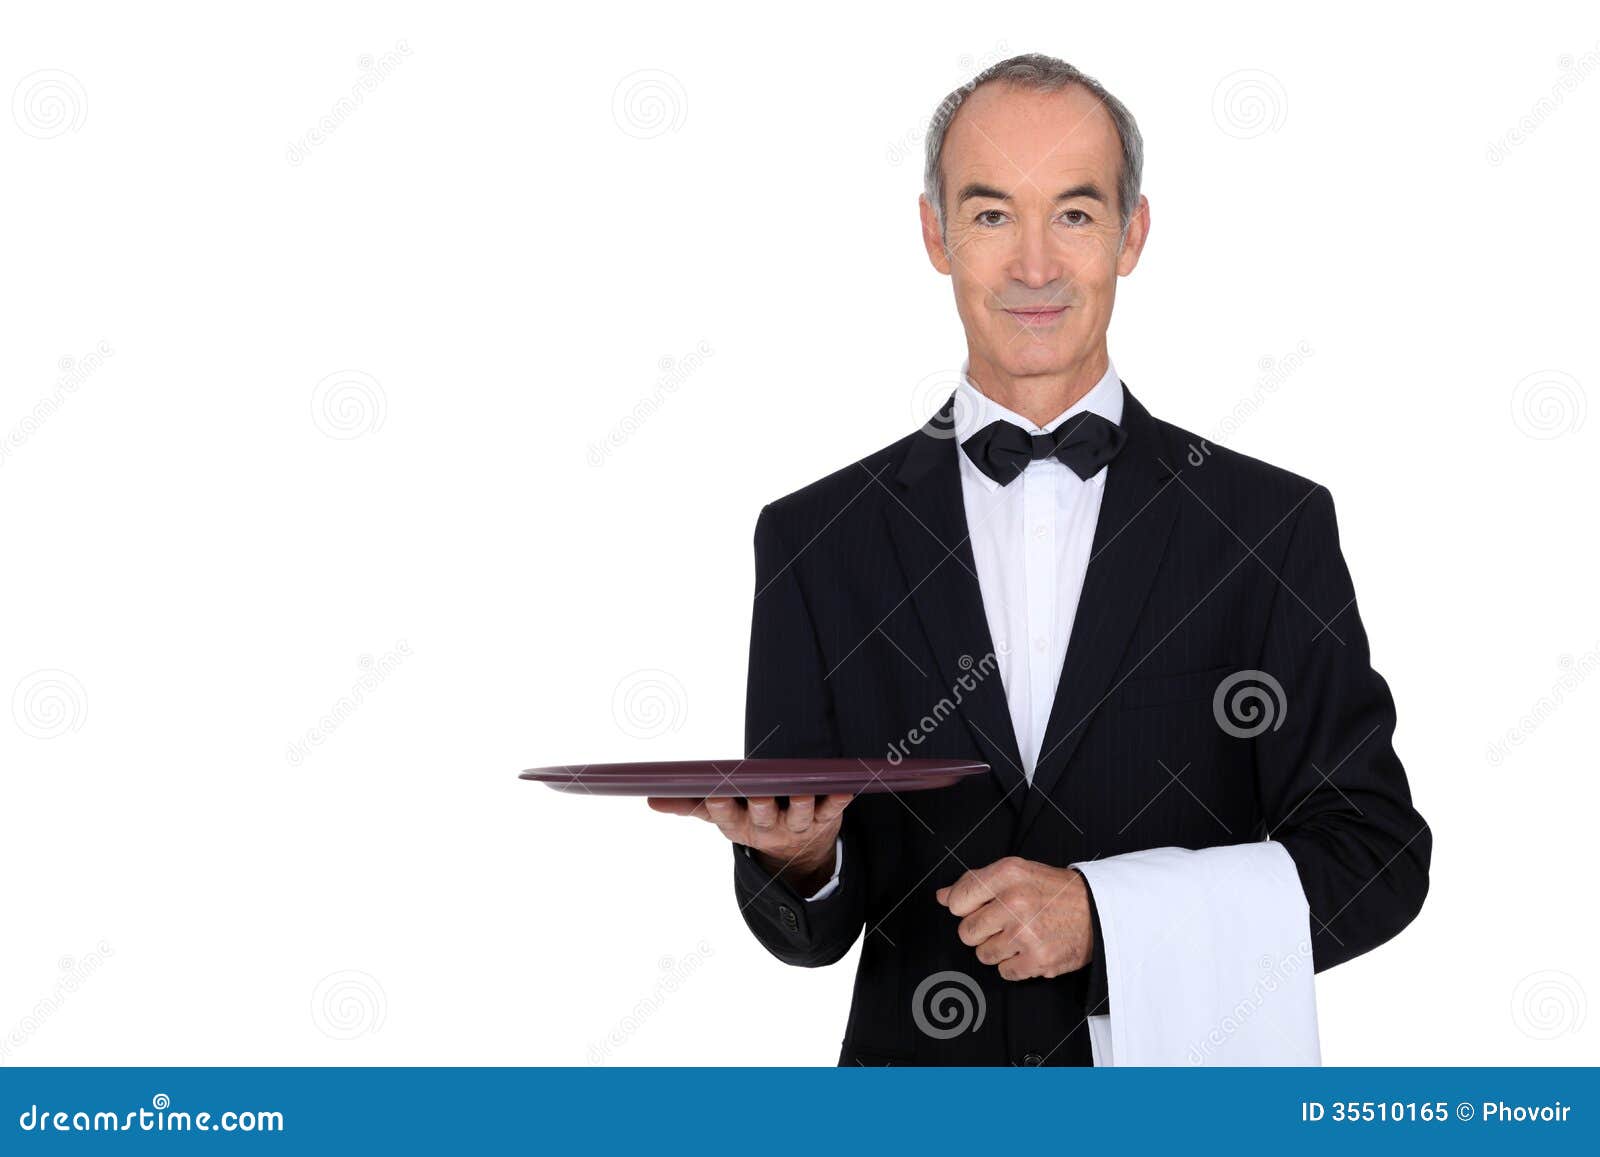 waiter in tuxedo